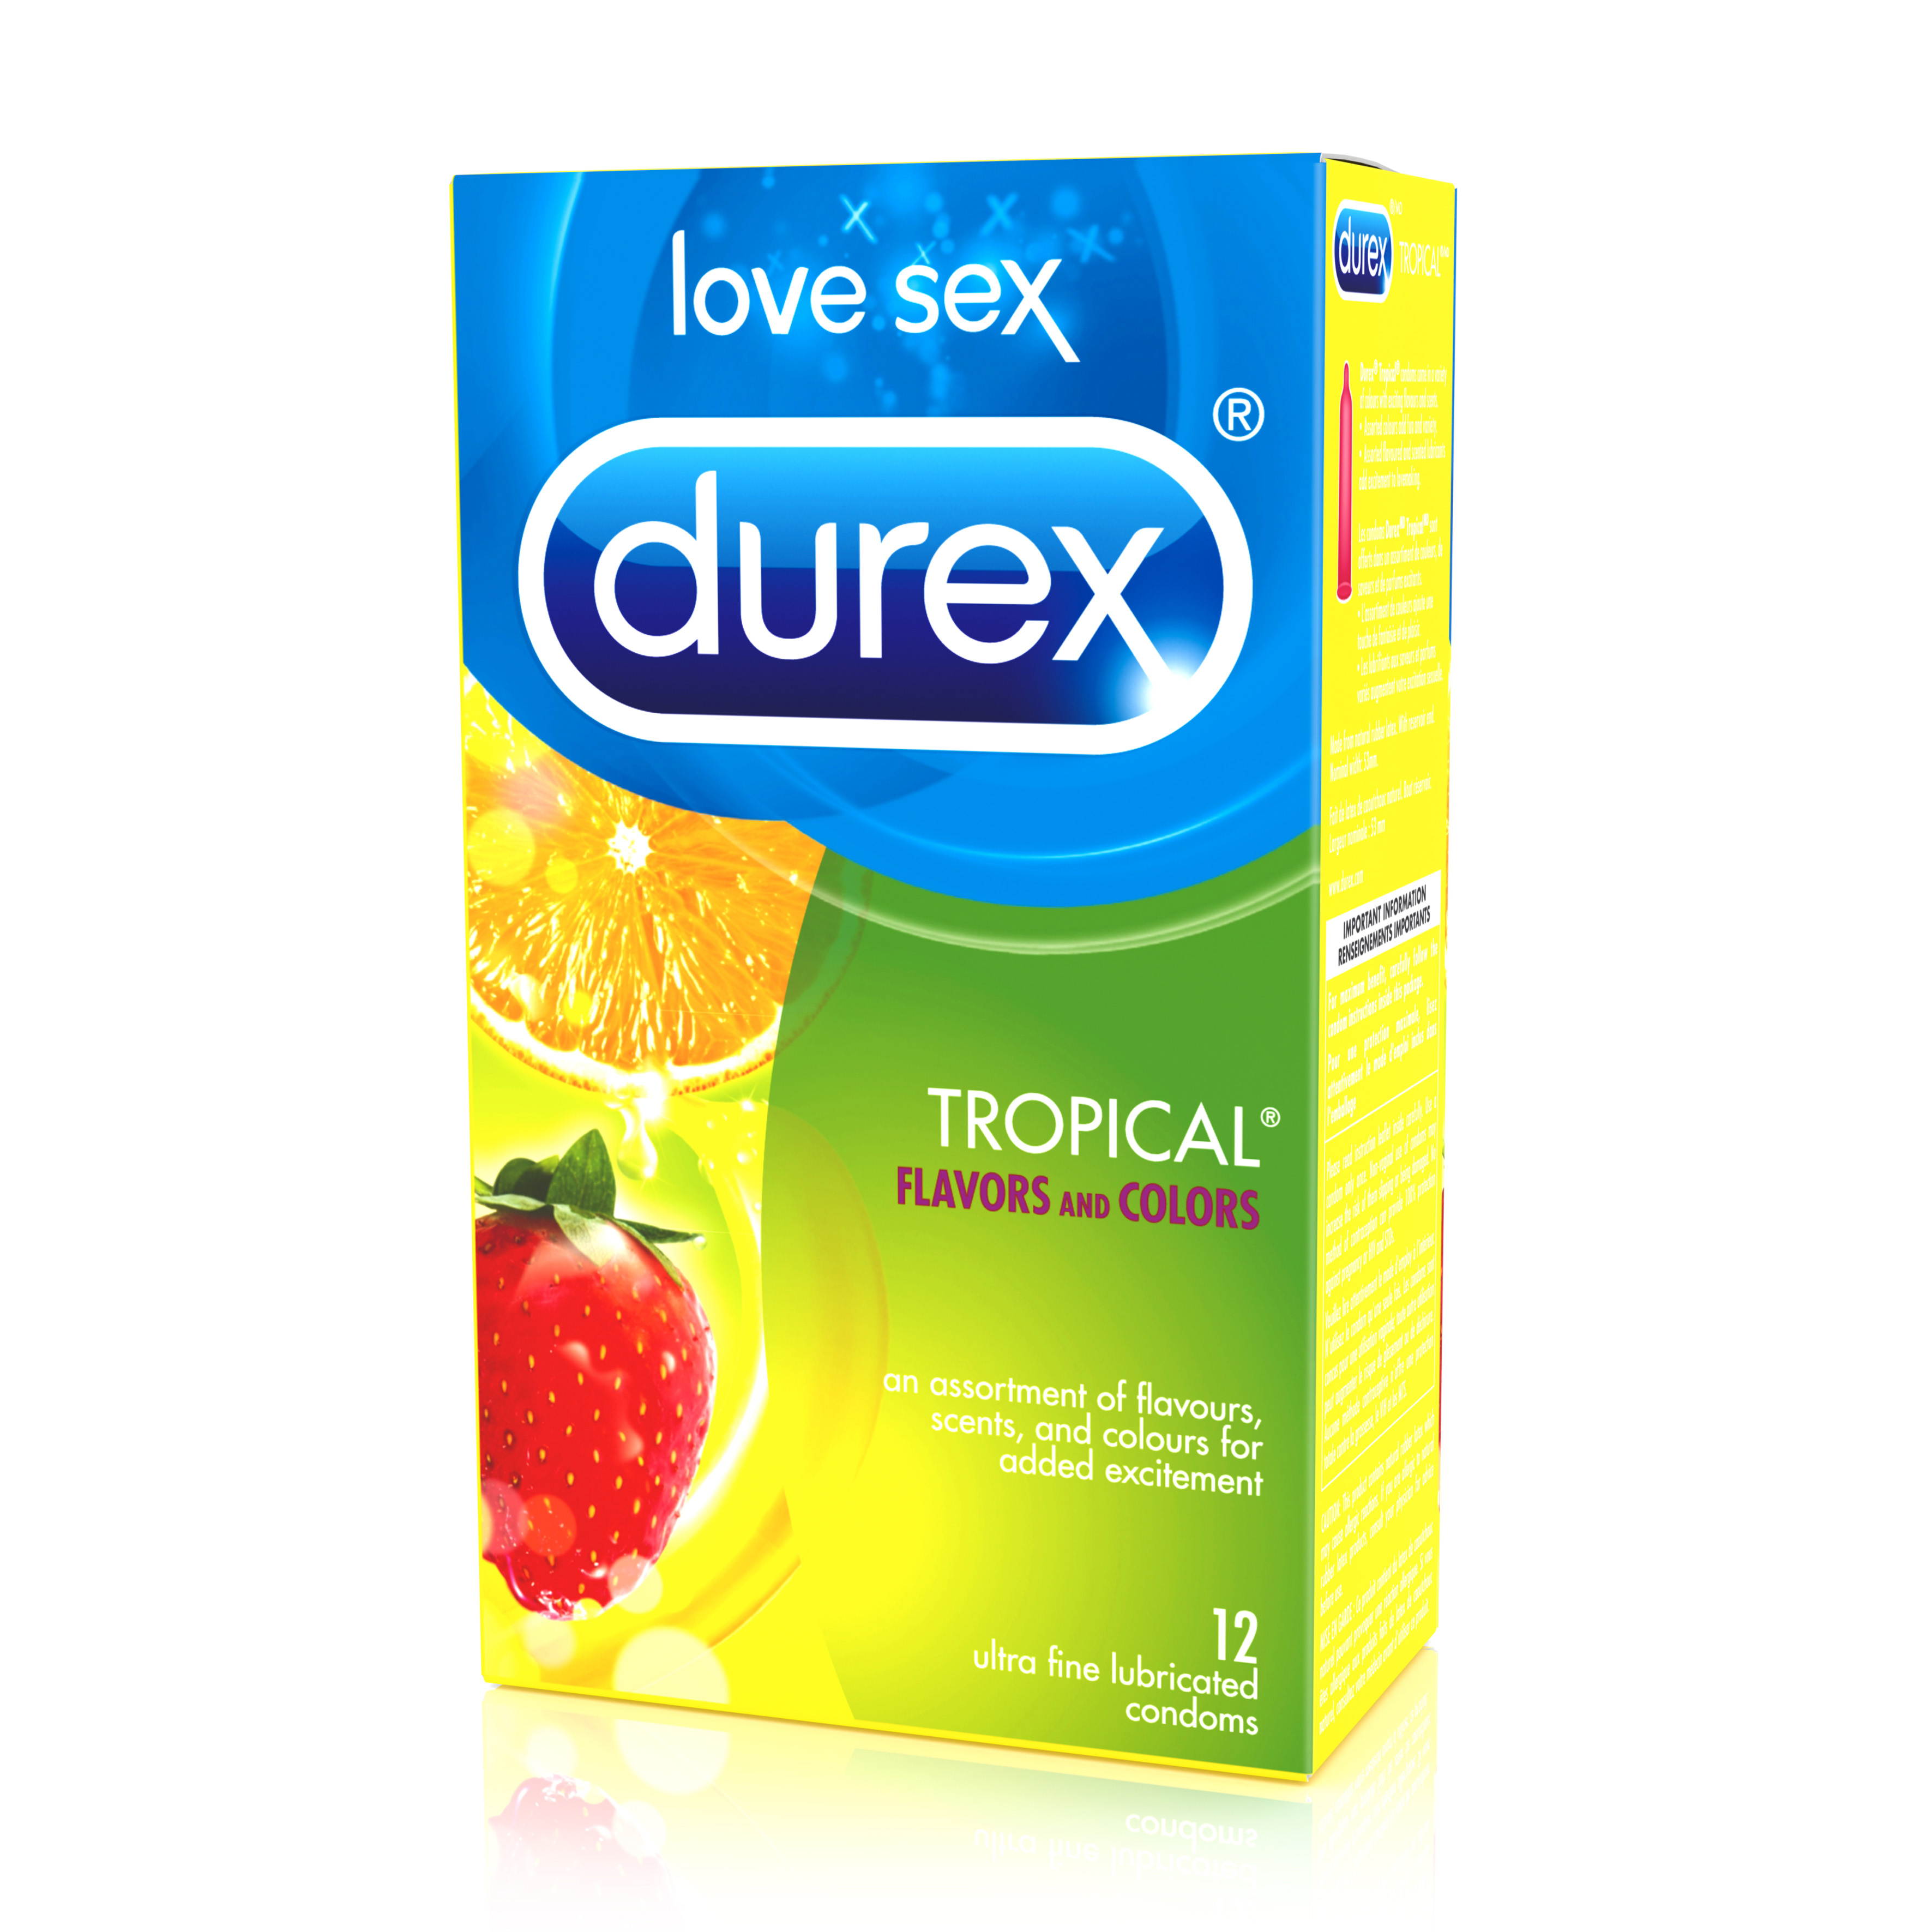 DUREX Tropcial Lubricated Condoms Canada